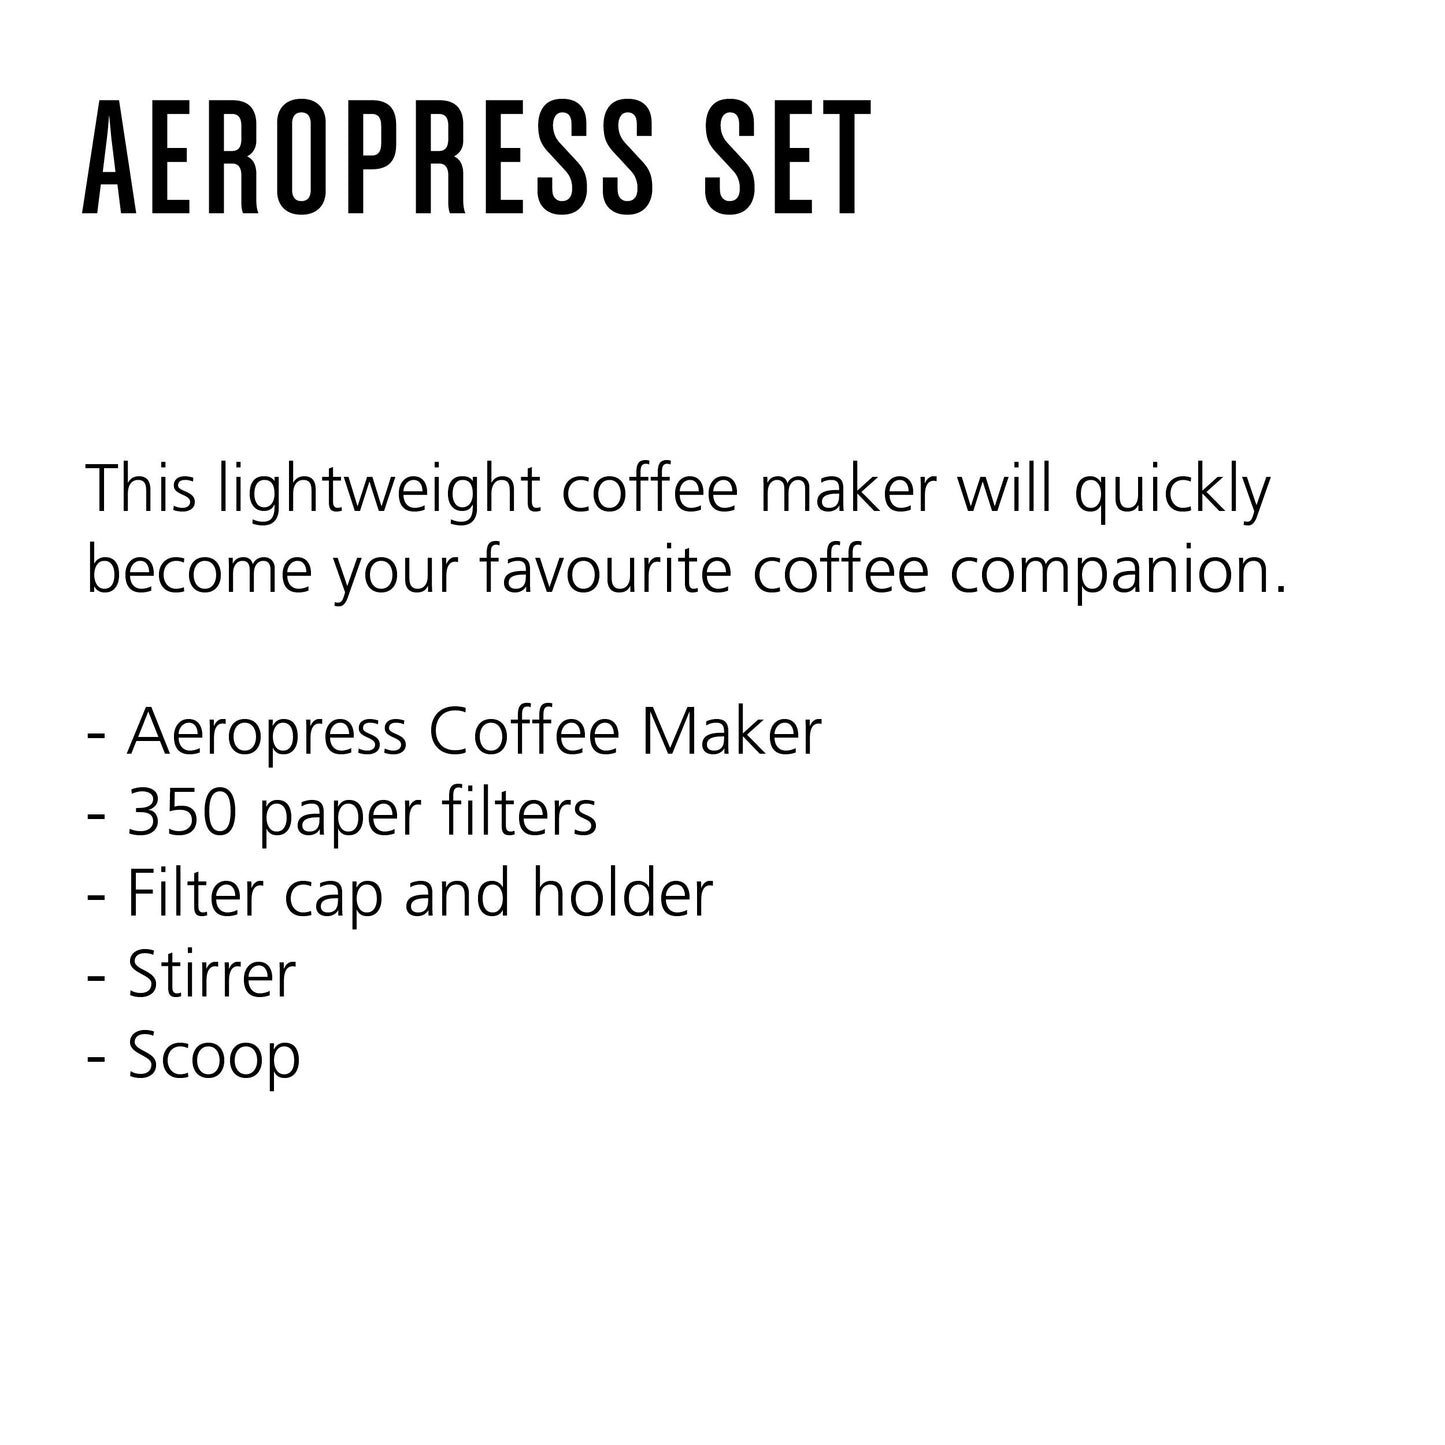 Aeropress Set - Details